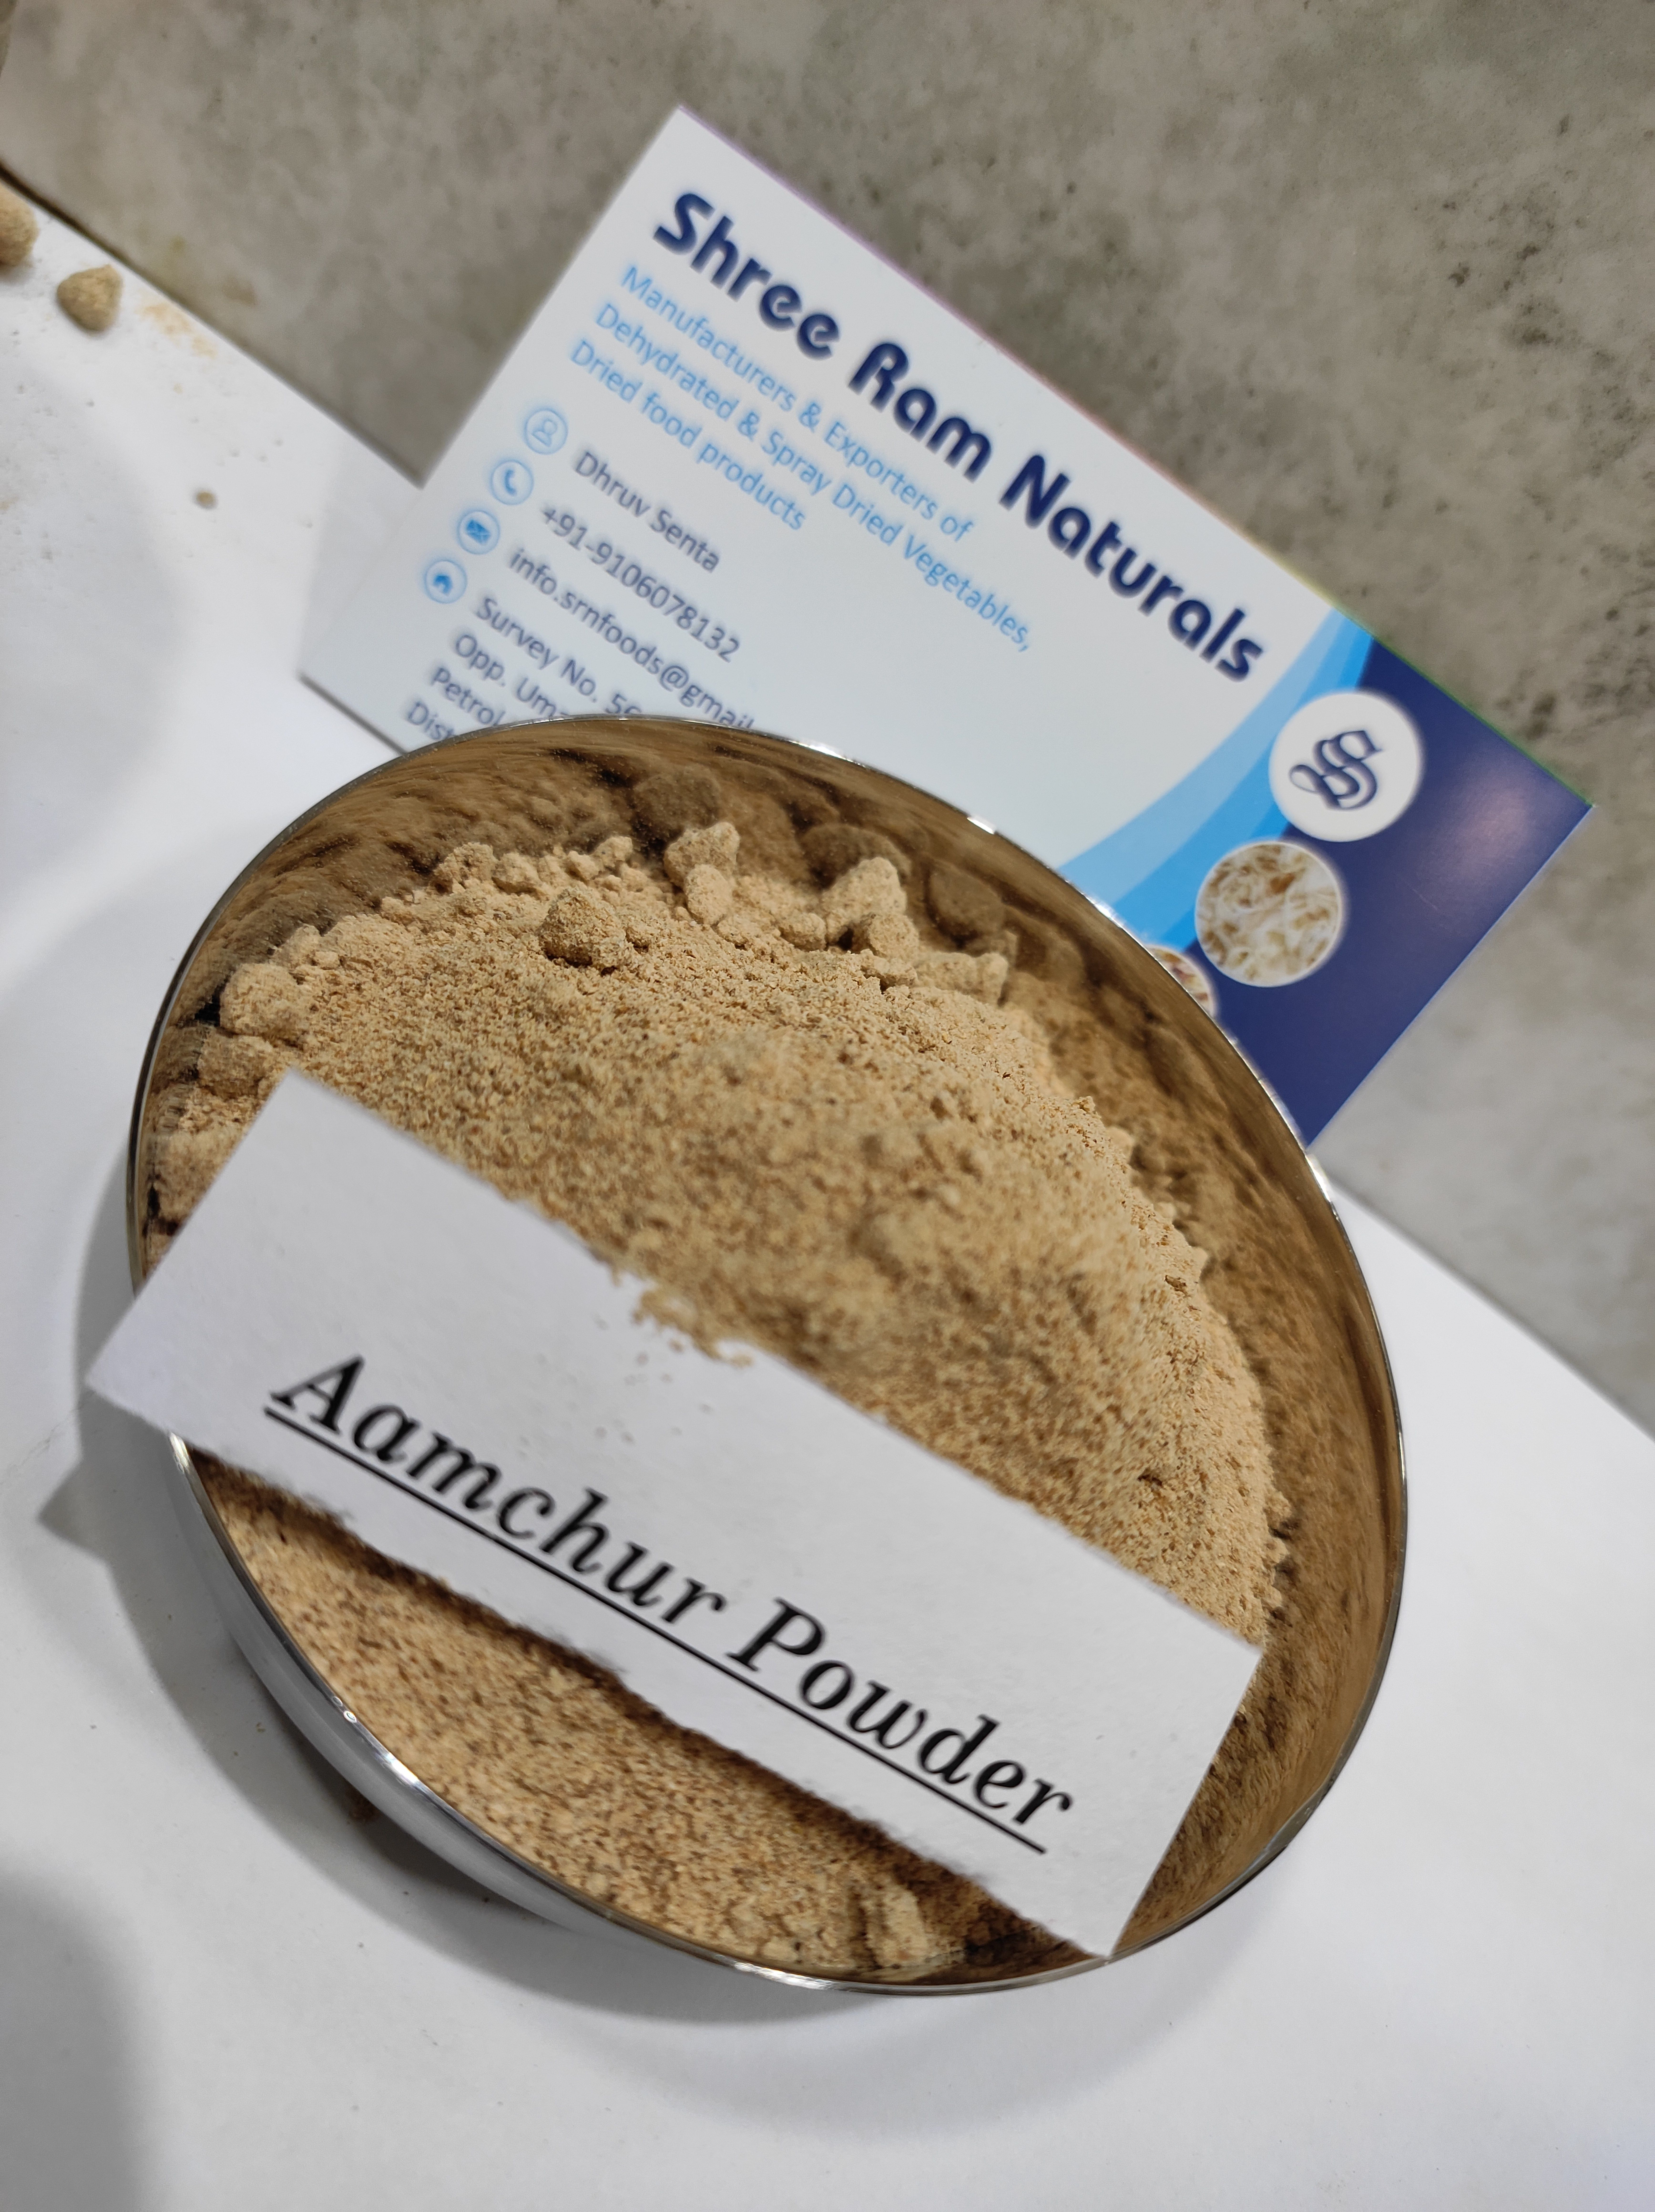 Natural Amchur Powder